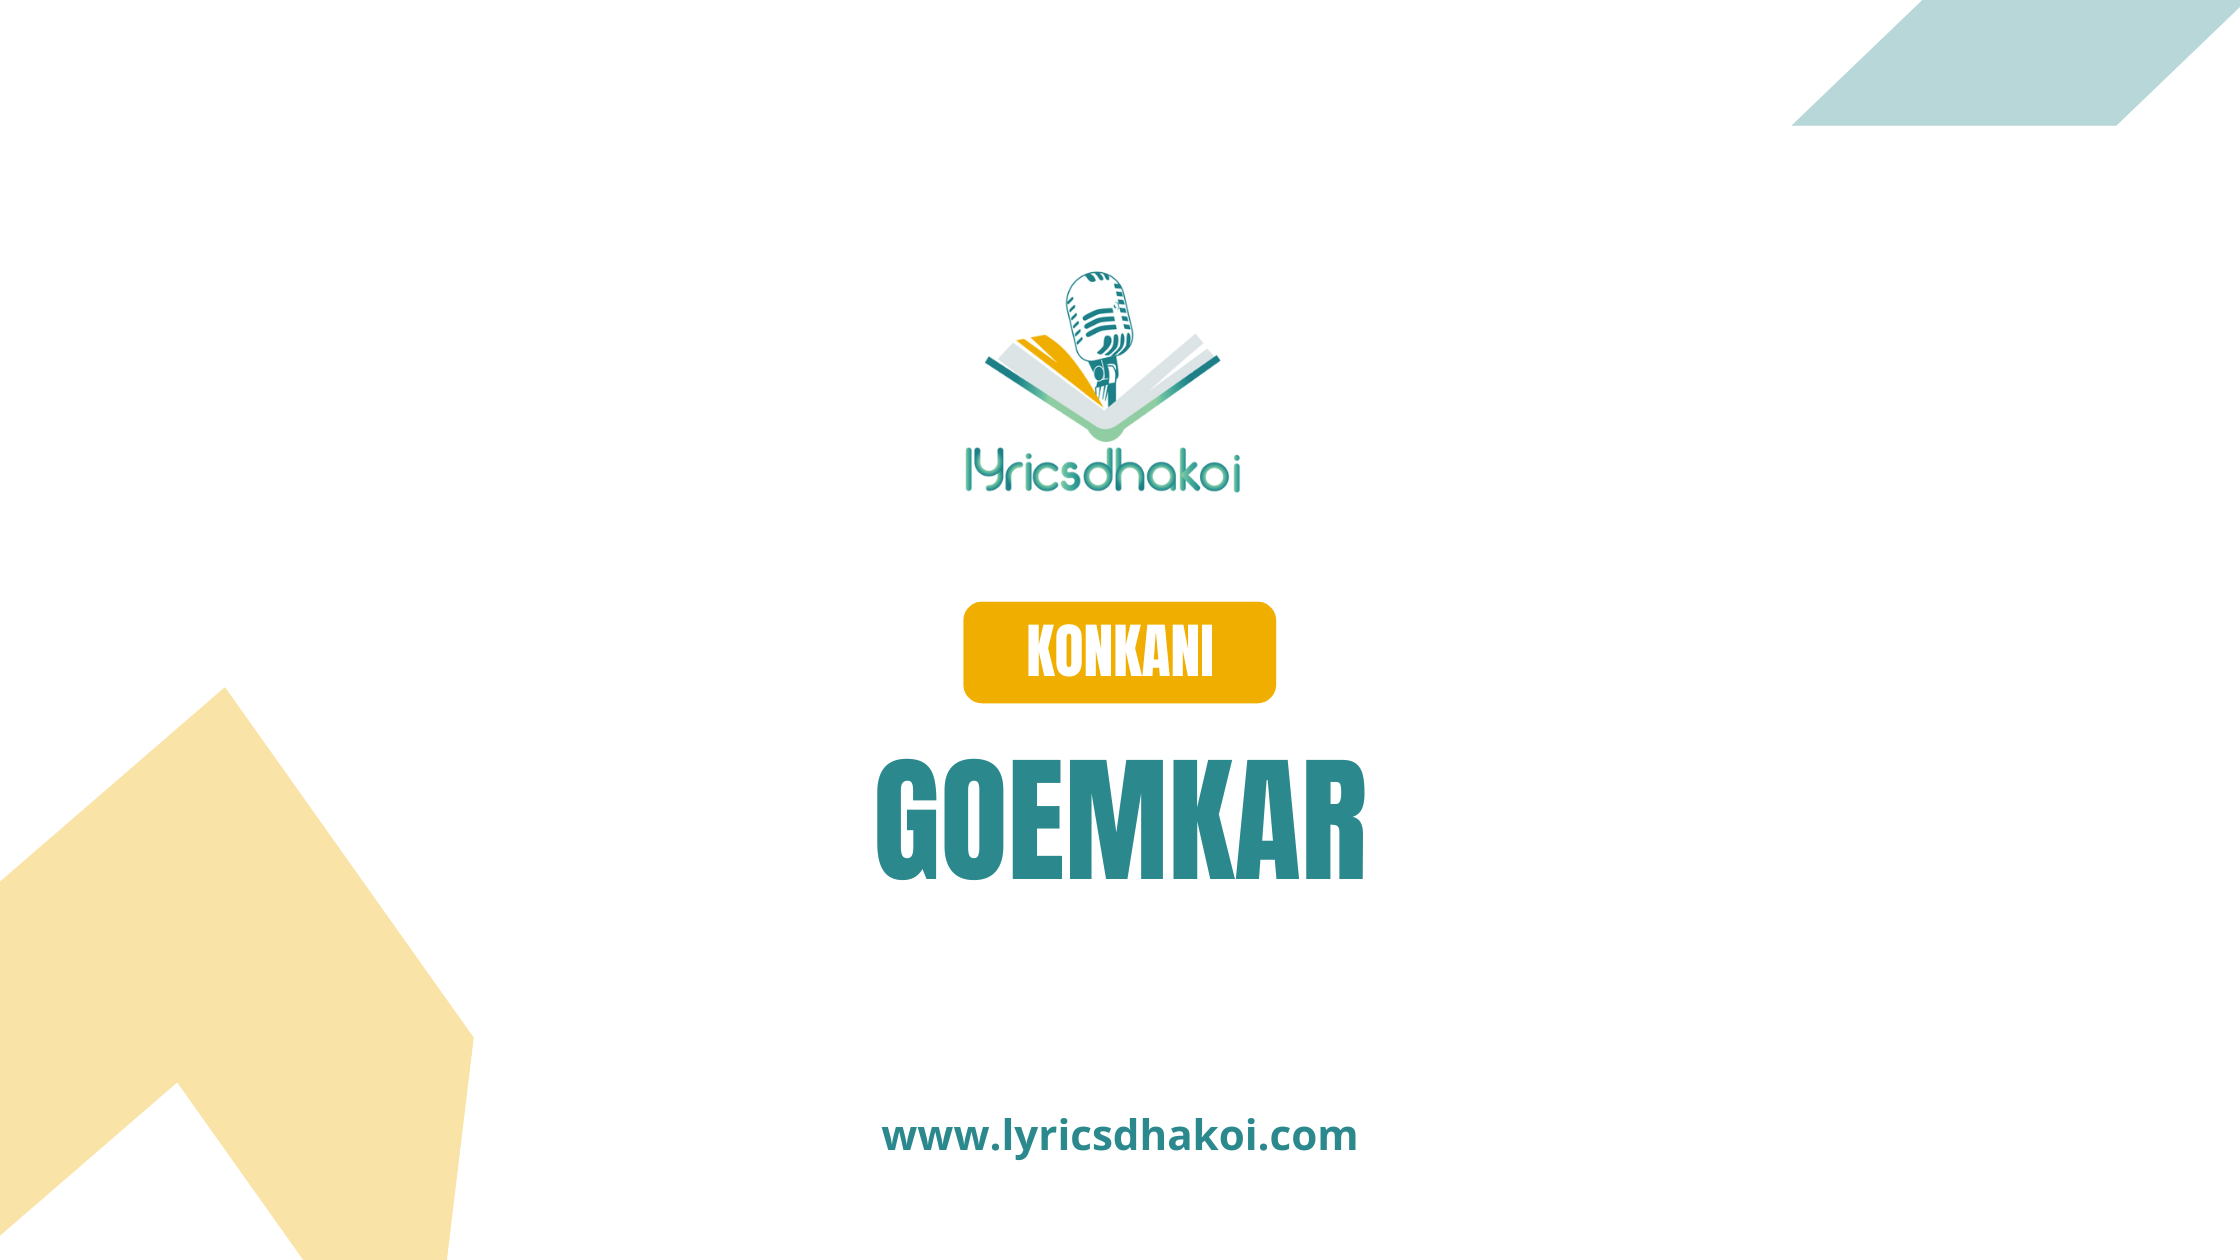 Goemkar Konkani Lyrics for Karaoke Online - LyricsDhakoi.com